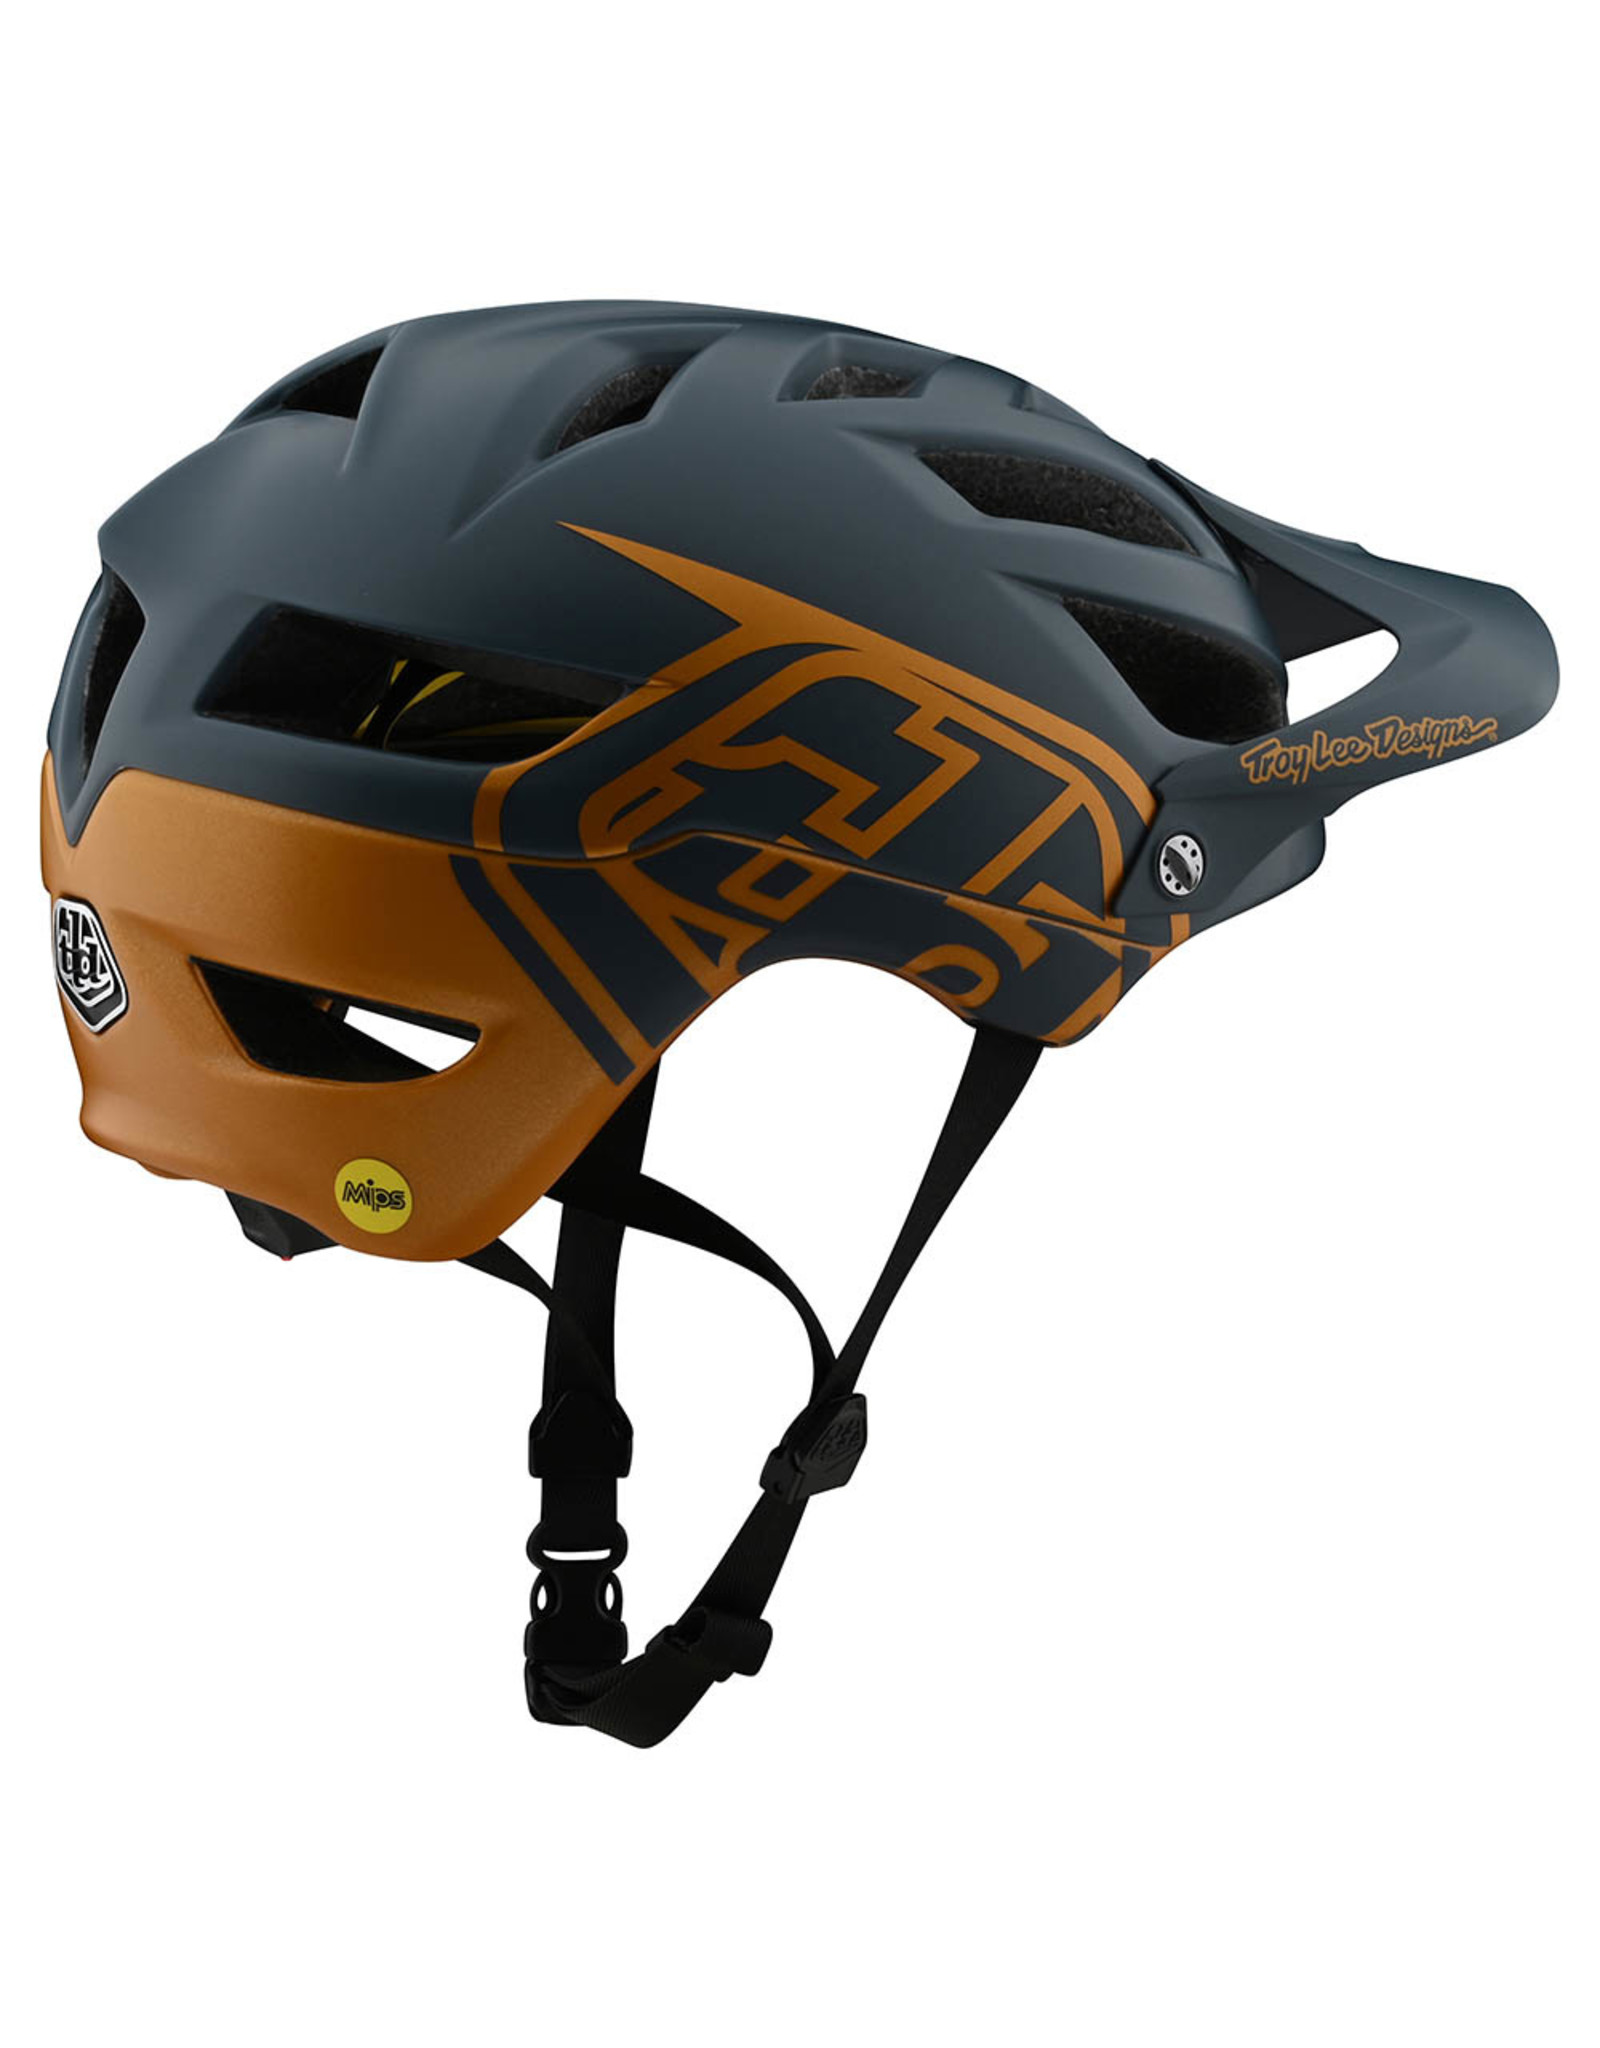 Troy Lee Designs A1 Classic Helmet